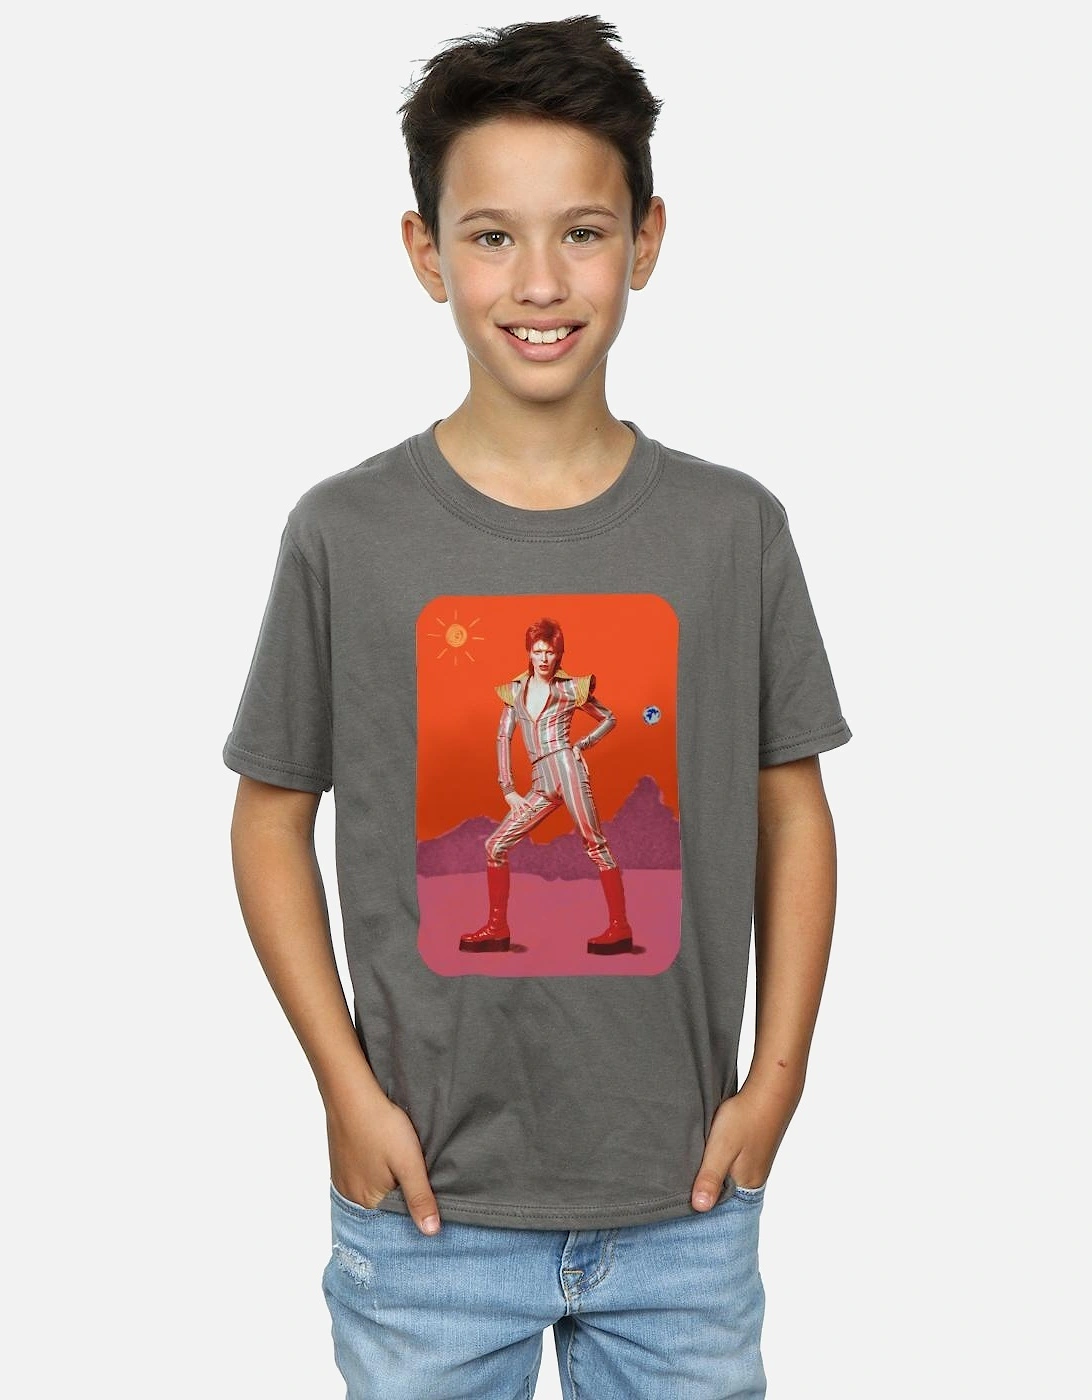 Boys On Mars T-Shirt